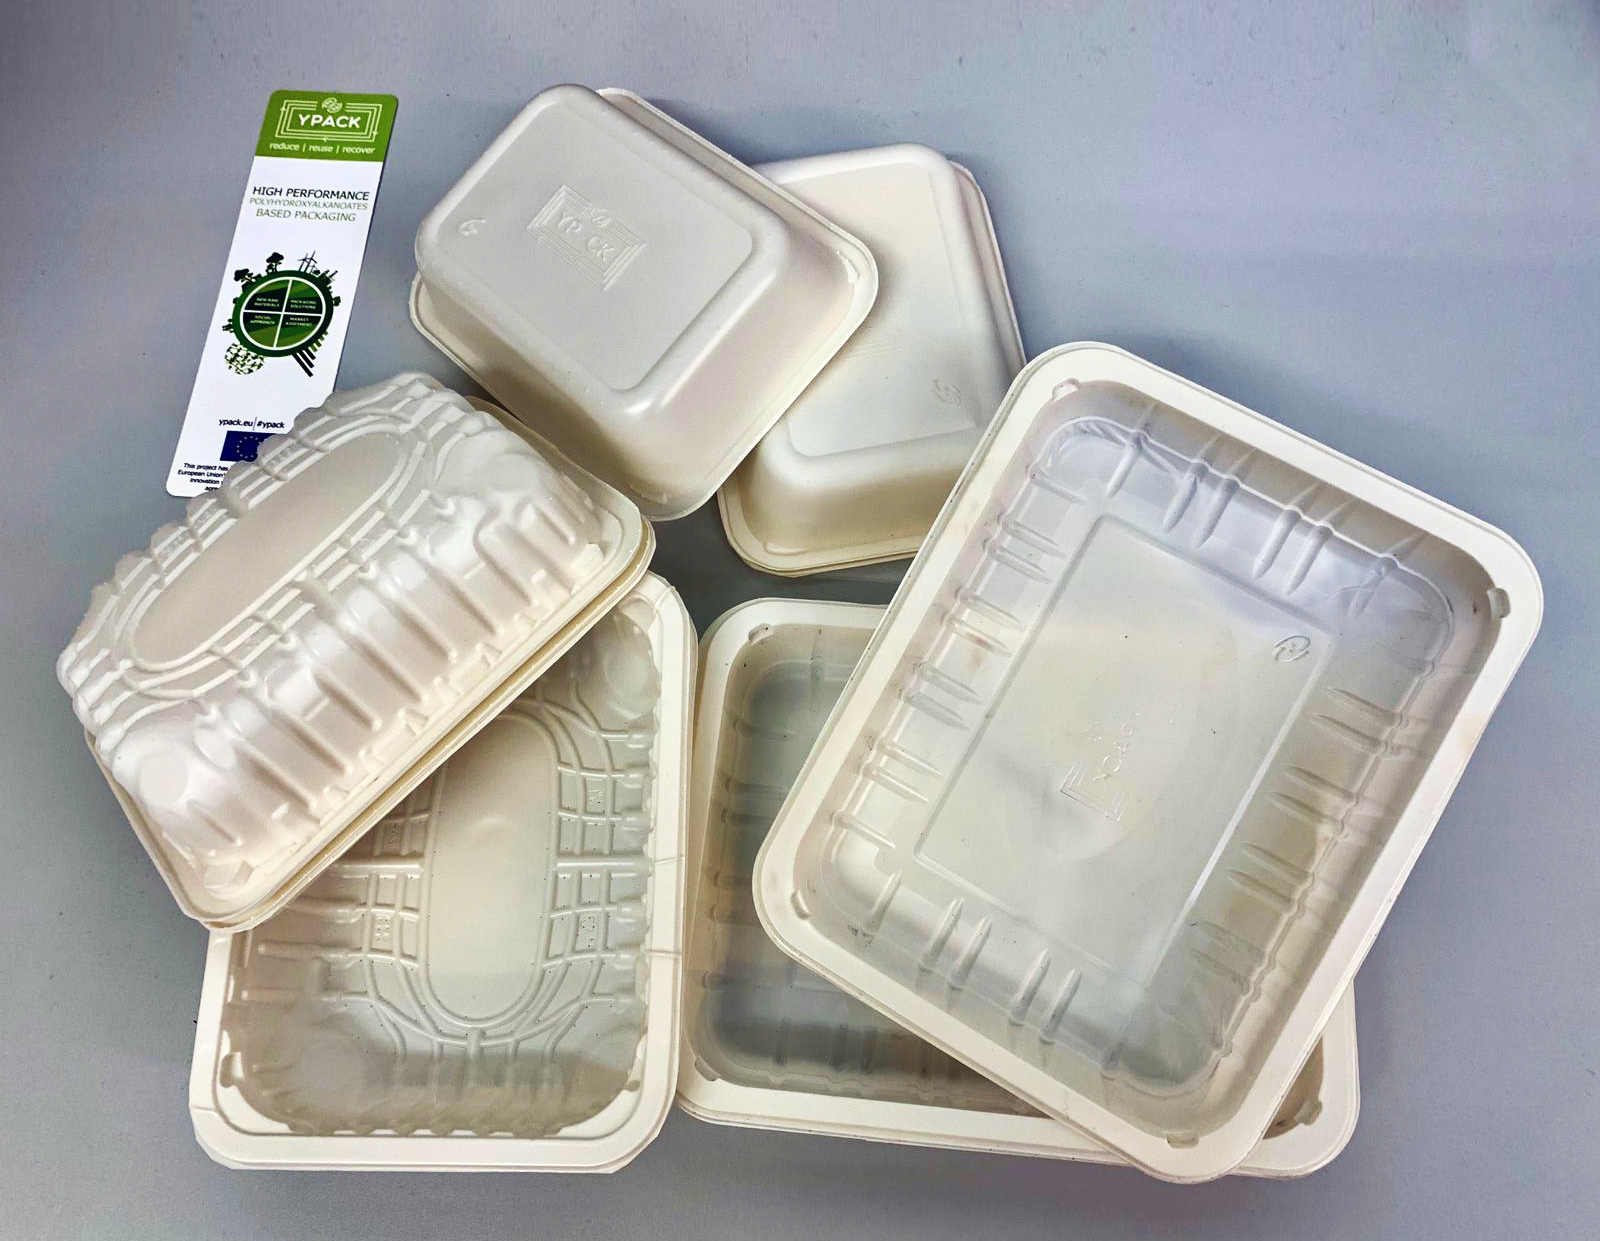 Plastic packages. Пластиковая упаковка для пищевых продуктов. Полимерная упаковка для пищевых продуктов. Биоразлагаемая упаковка для еды. Биоразлагаемая пластиковая упаковка.